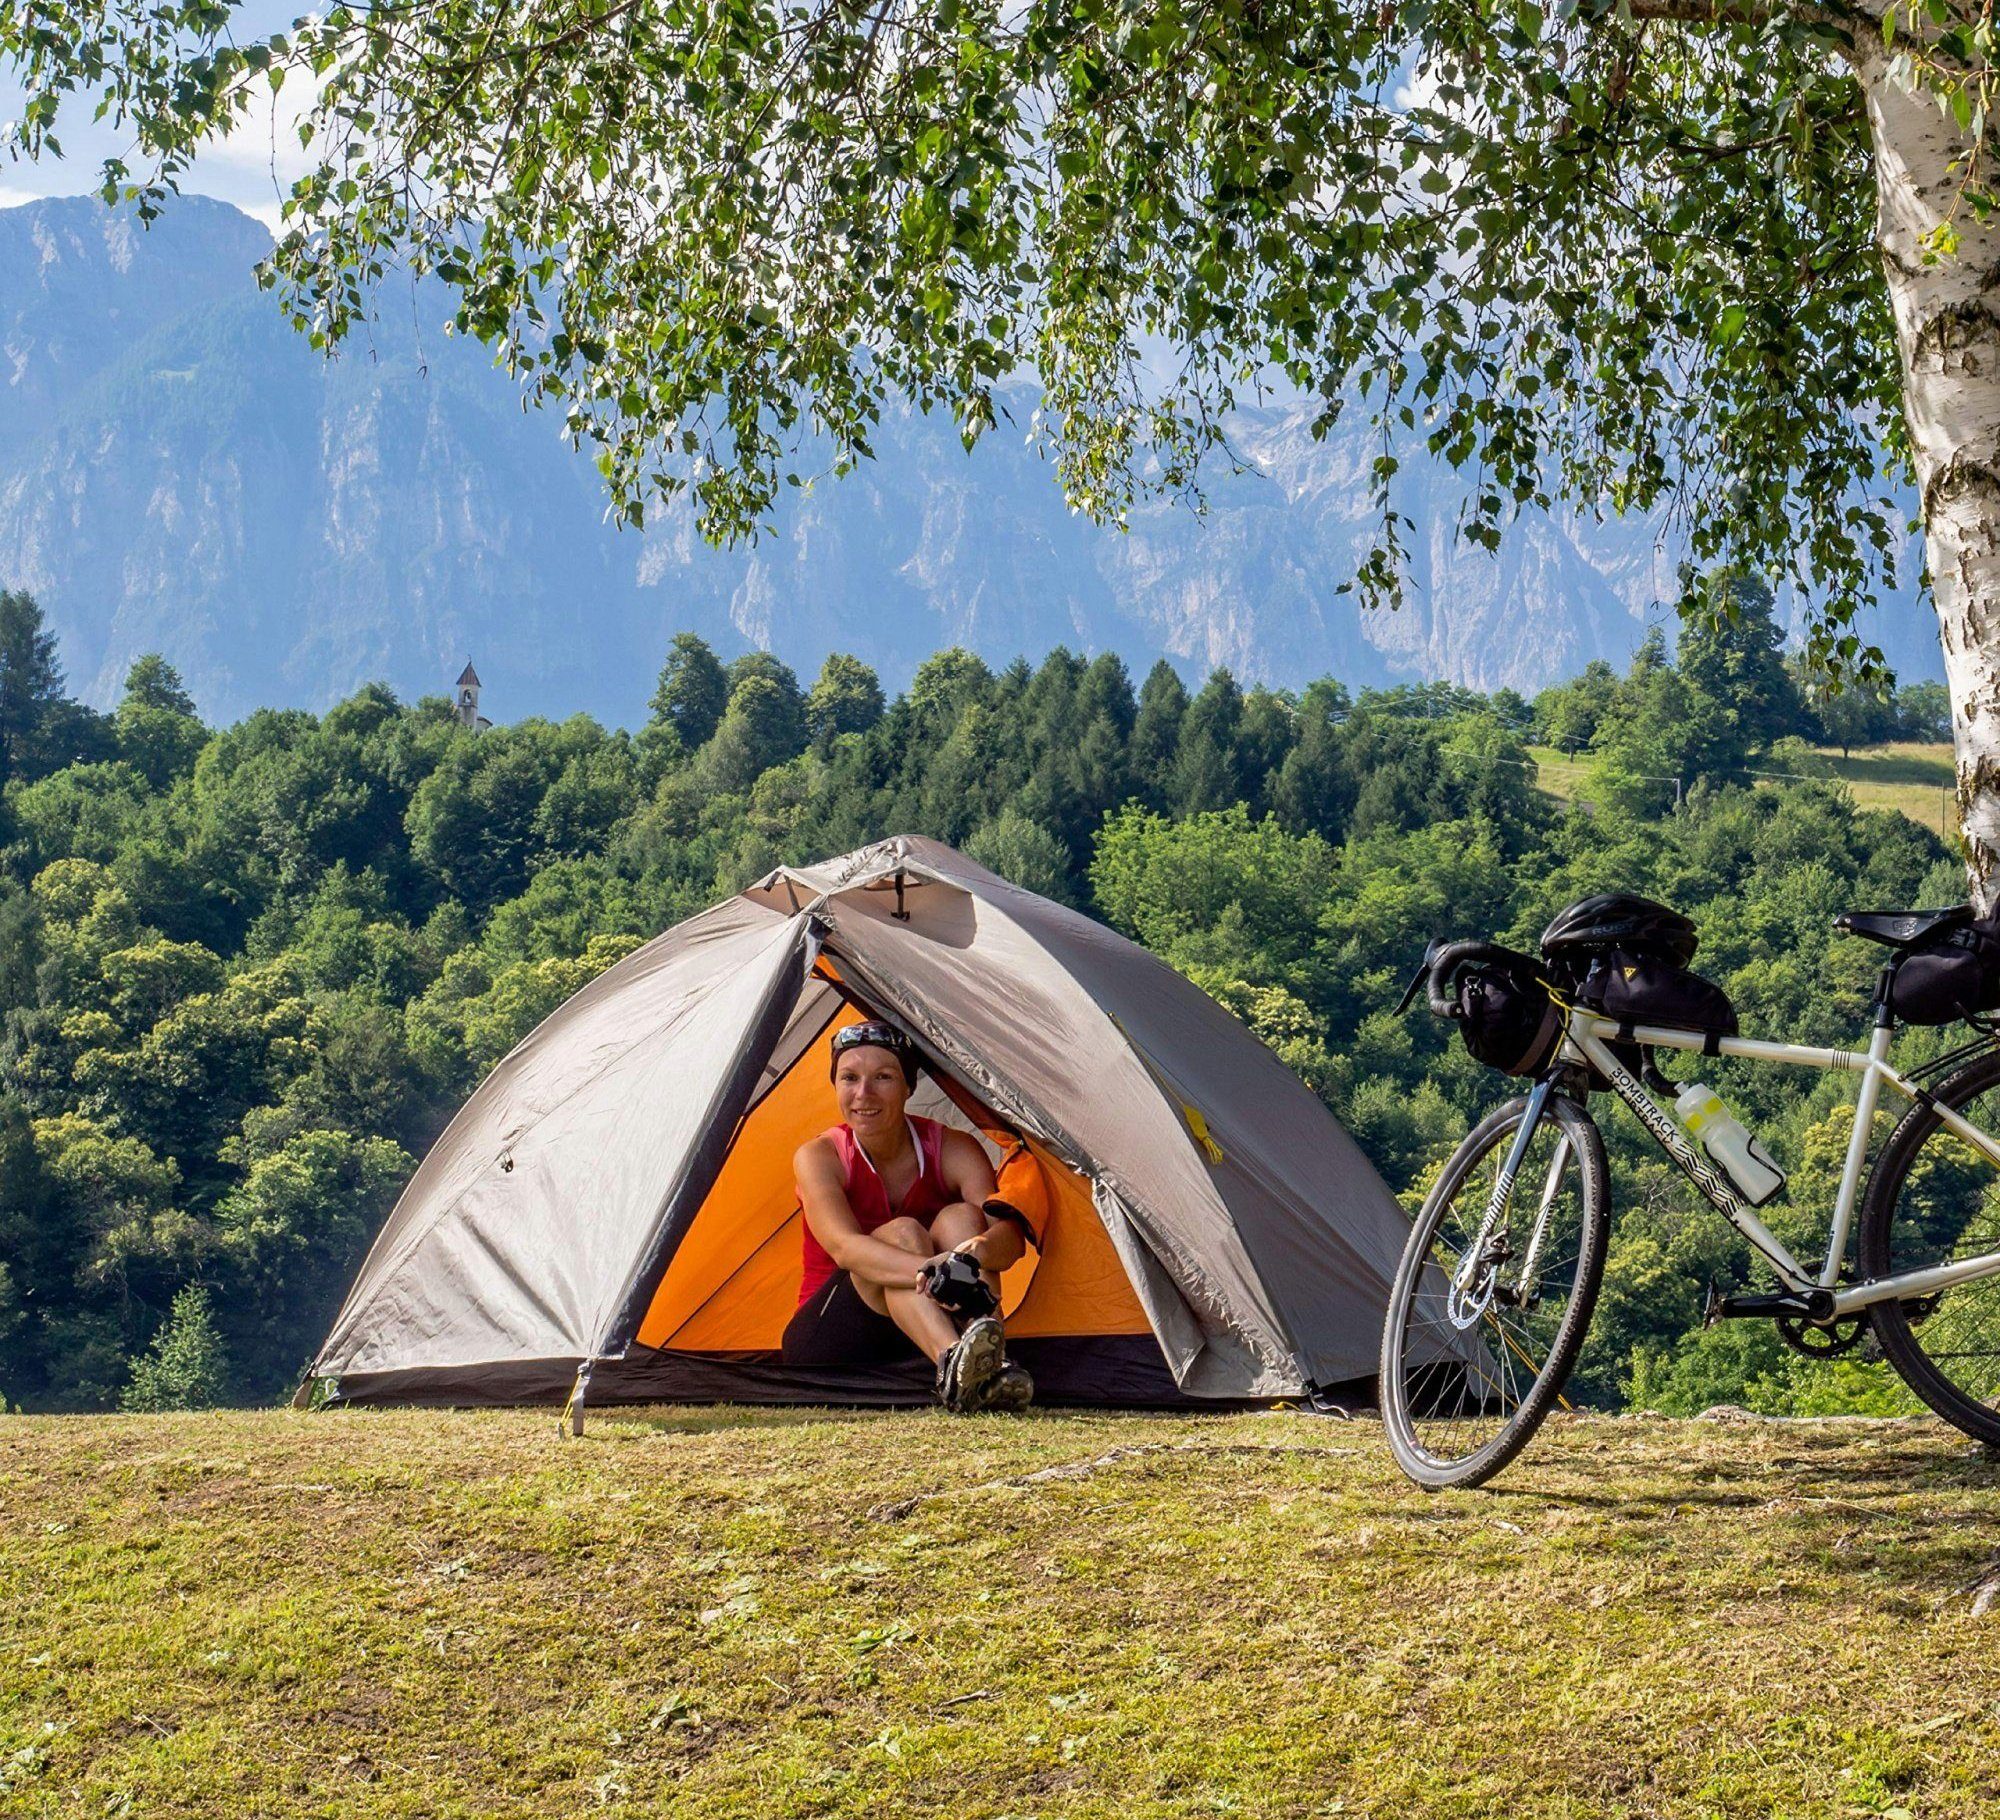 Travel Vielseitiges Kuppelzelt Tents Geodät Zelt, Personen: Line - Charger 2-Personen - 2 Wechsel Kuppelzelt